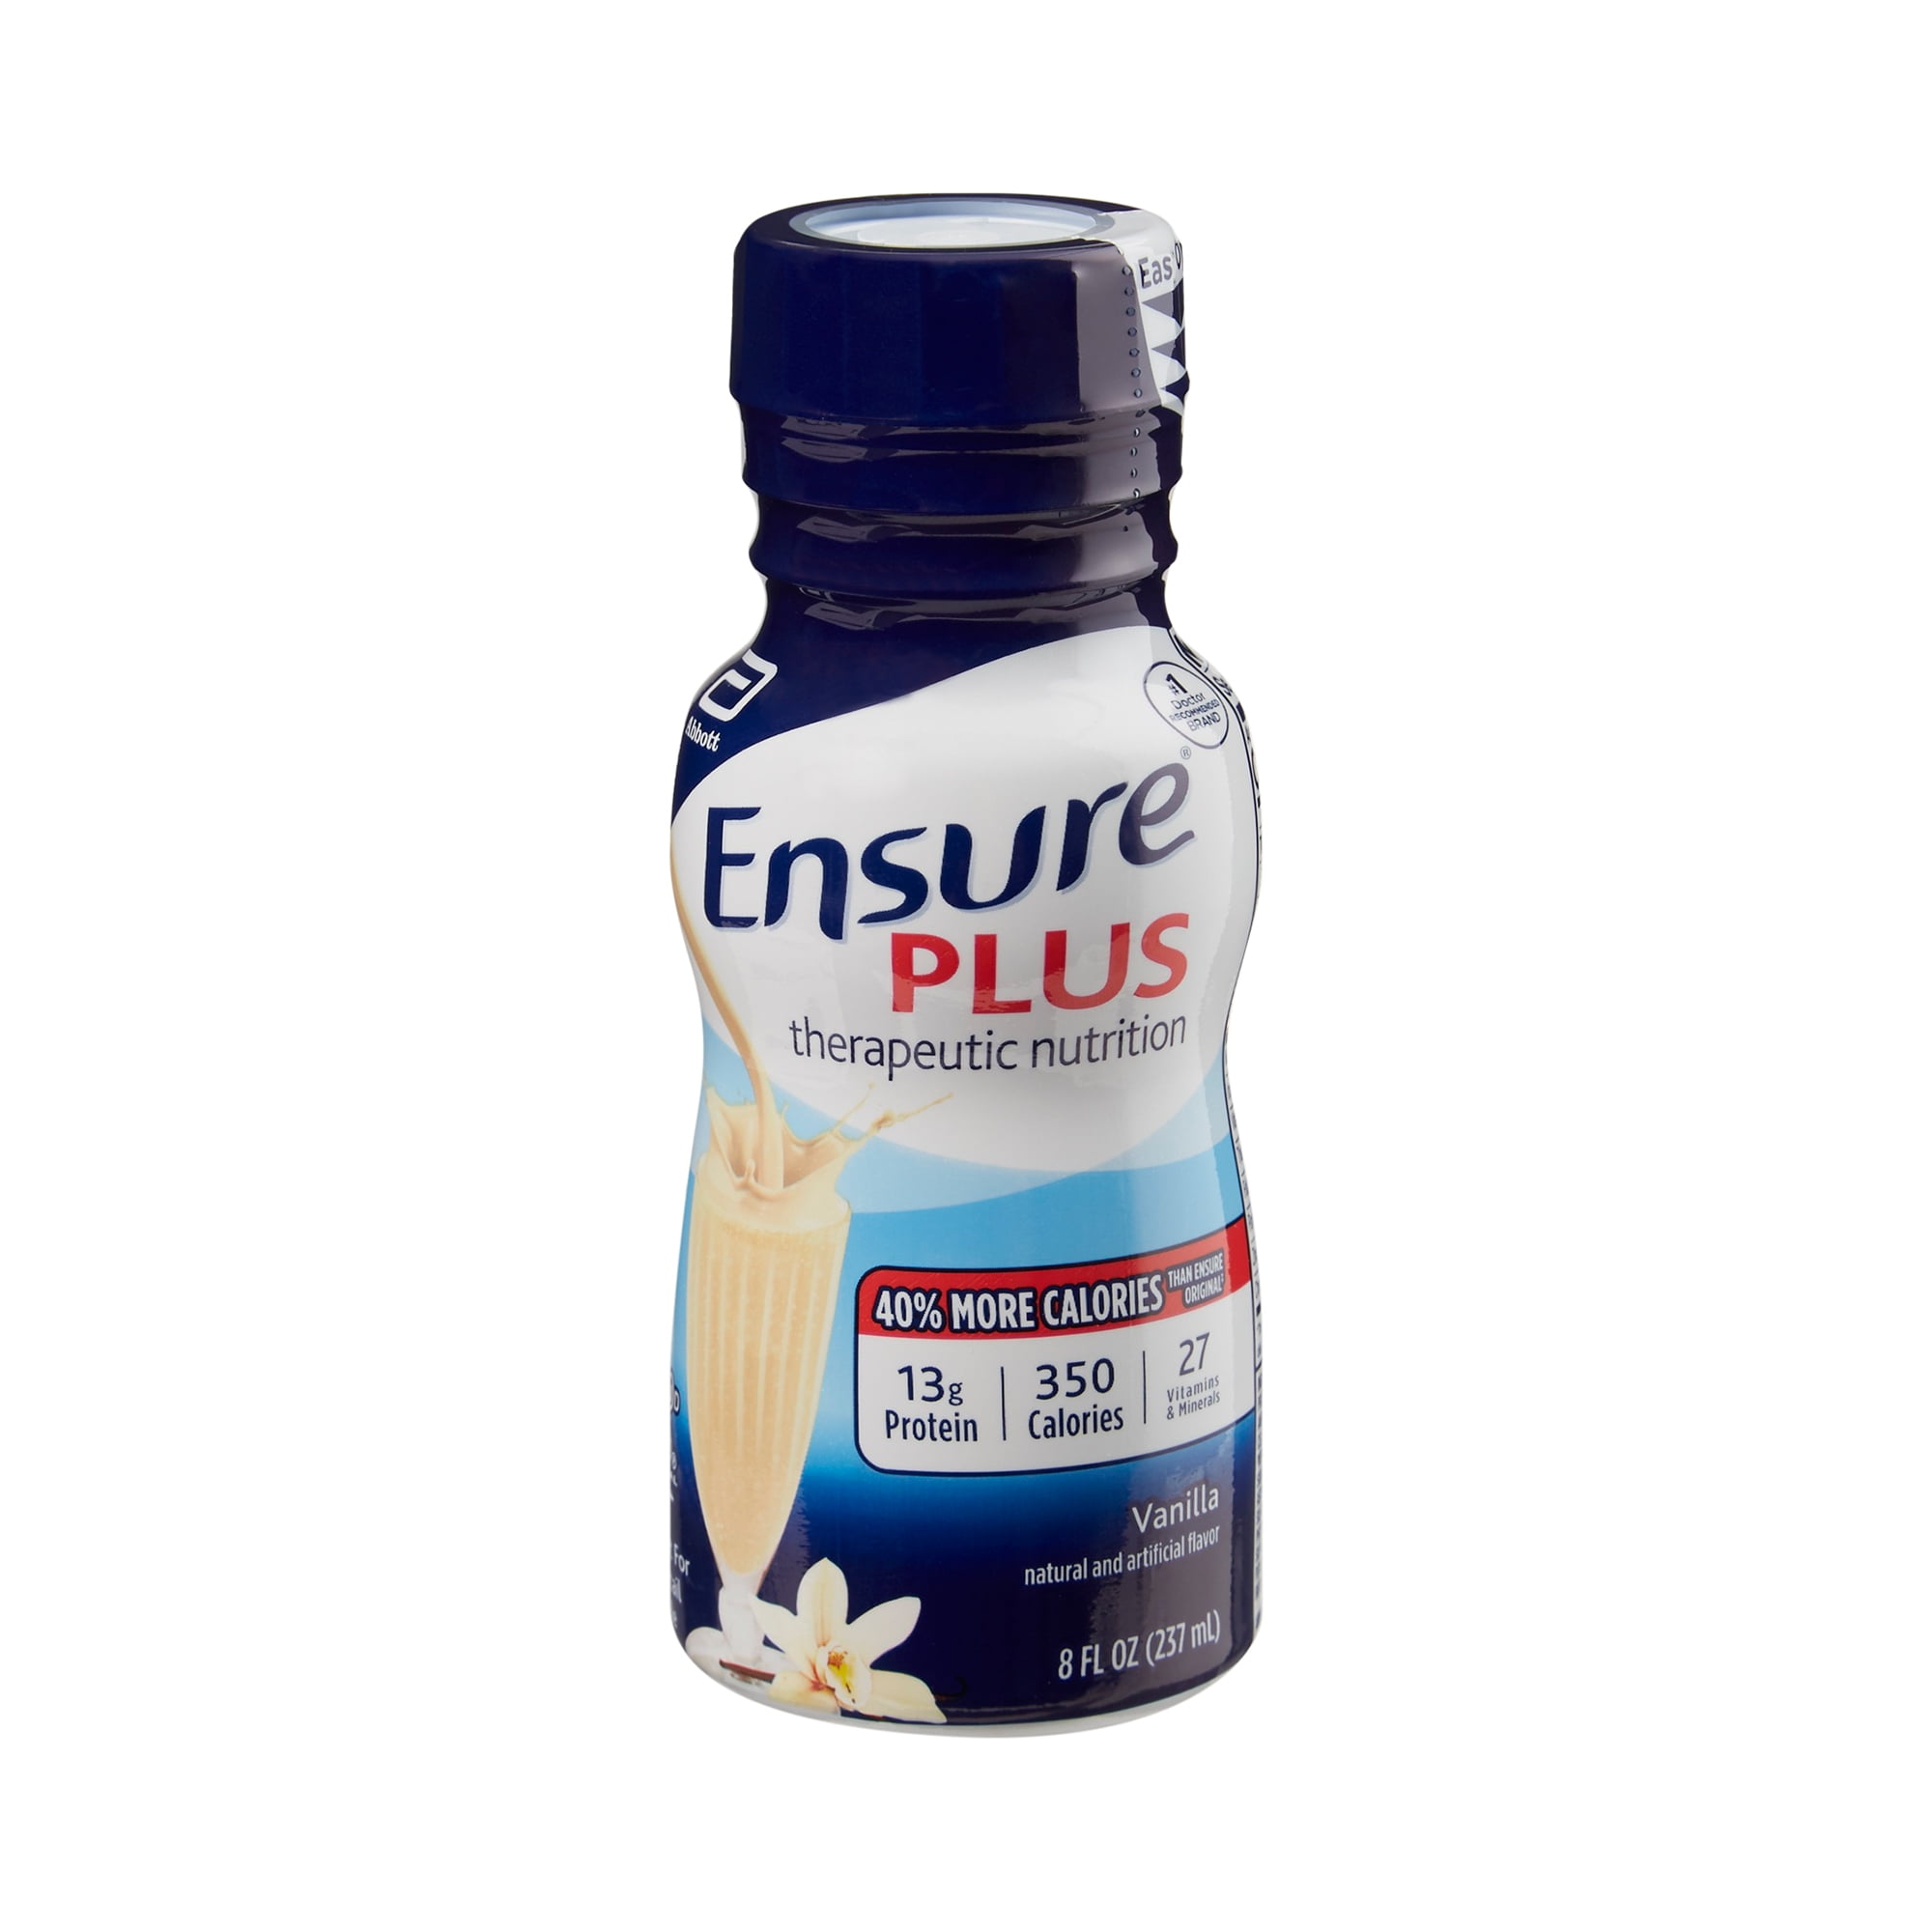 Ensure Plus Vanilla, 8 Ounce Bottle, Therapeutic Nutrition, Abbott